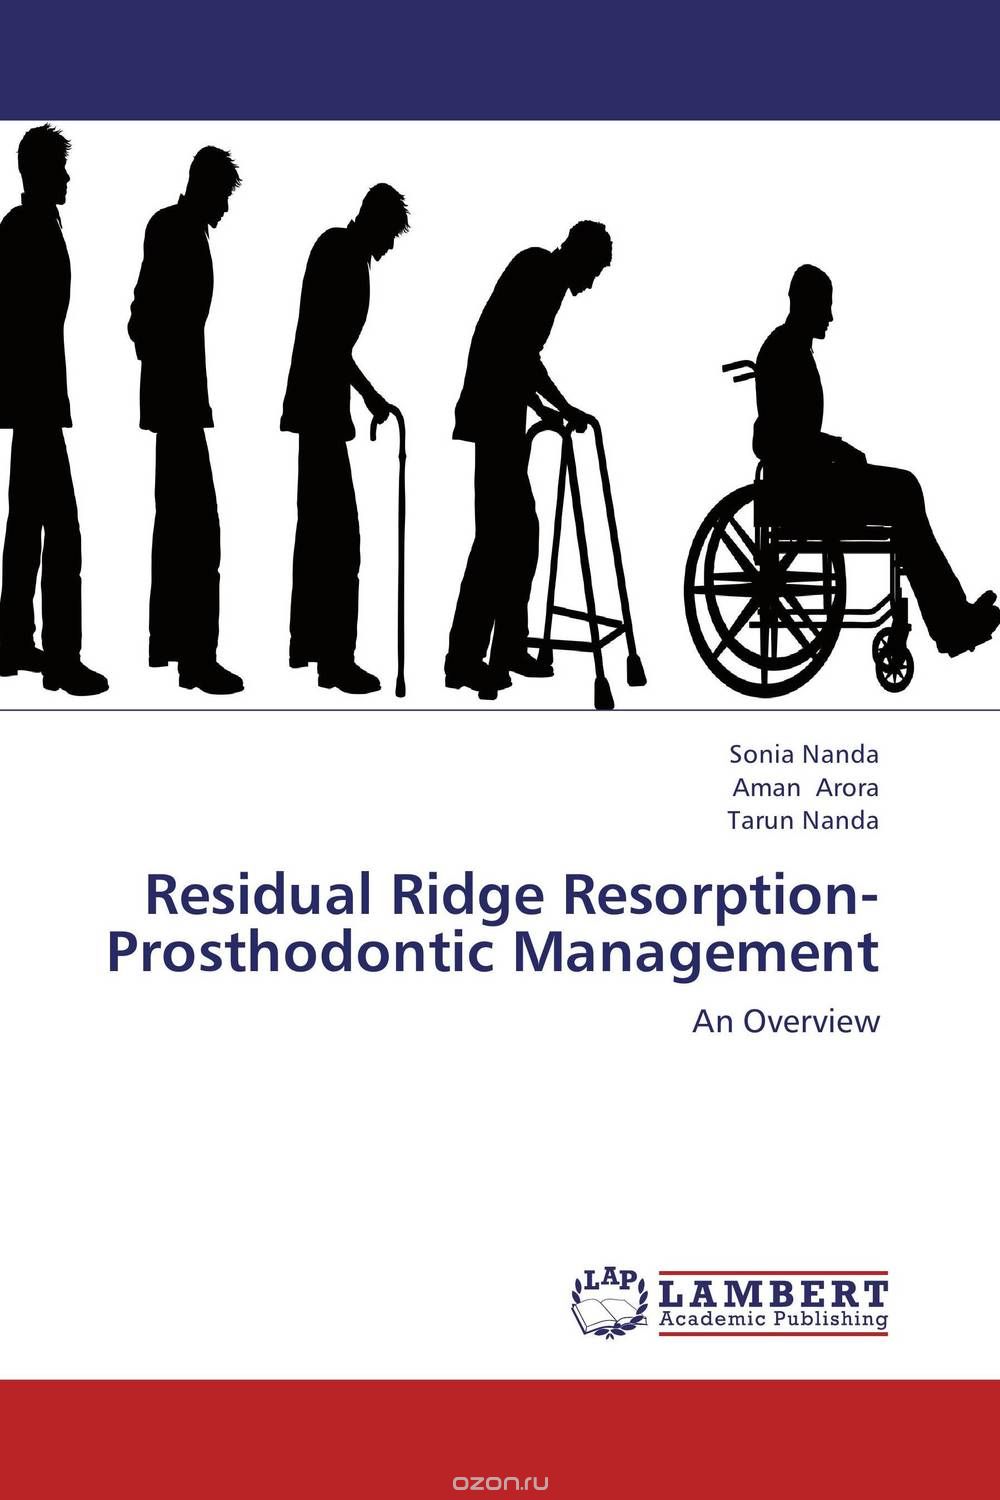 Скачать книгу "Residual Ridge Resorption-Prosthodontic Management"